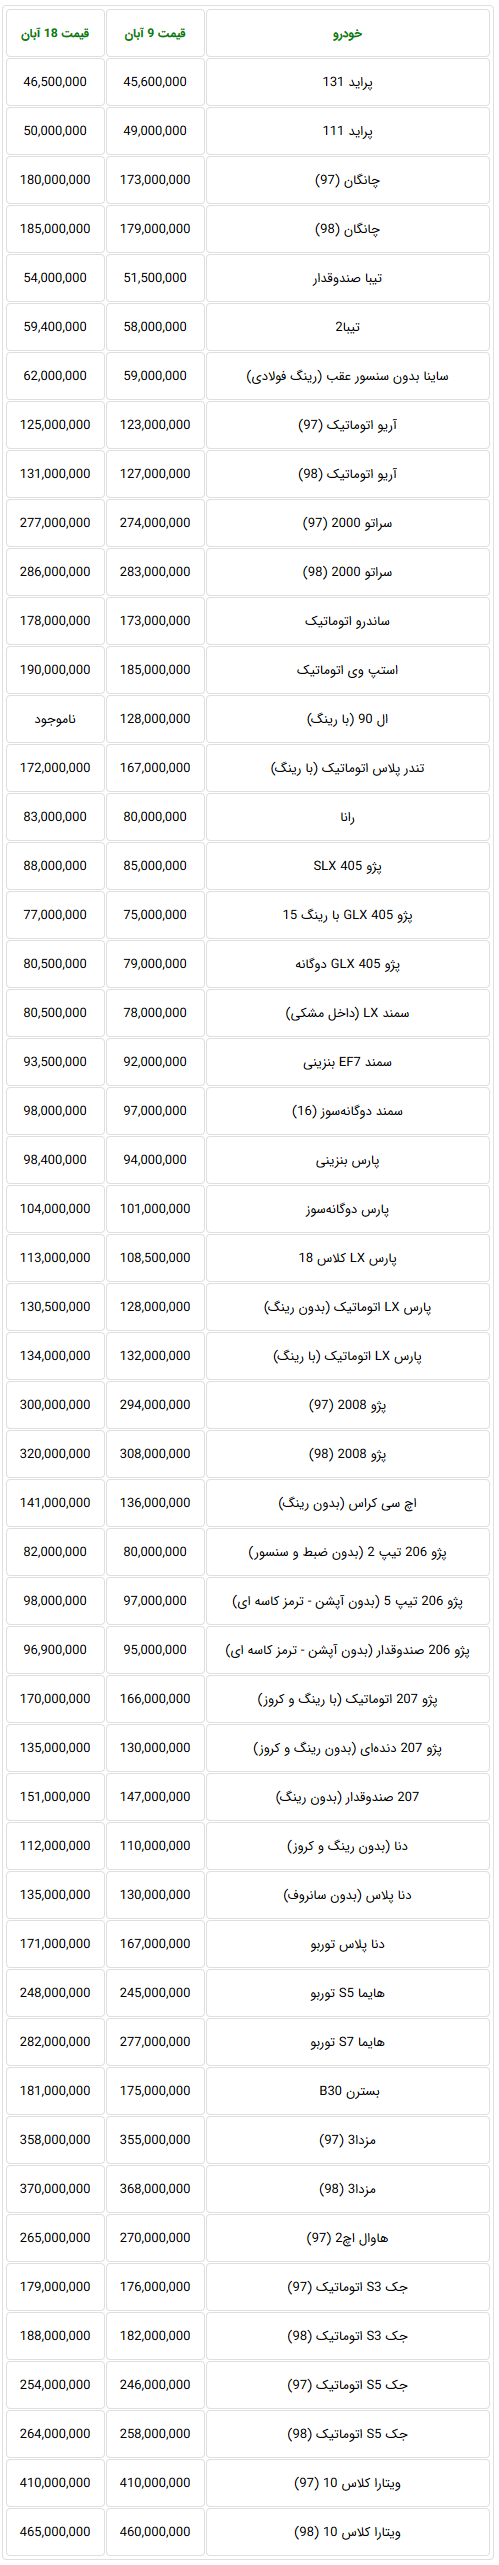 Screenshot_2019-11-09 جدیدترین قیمت خودروهای داخلی در بازار تهران امروز پنجشنبه.png